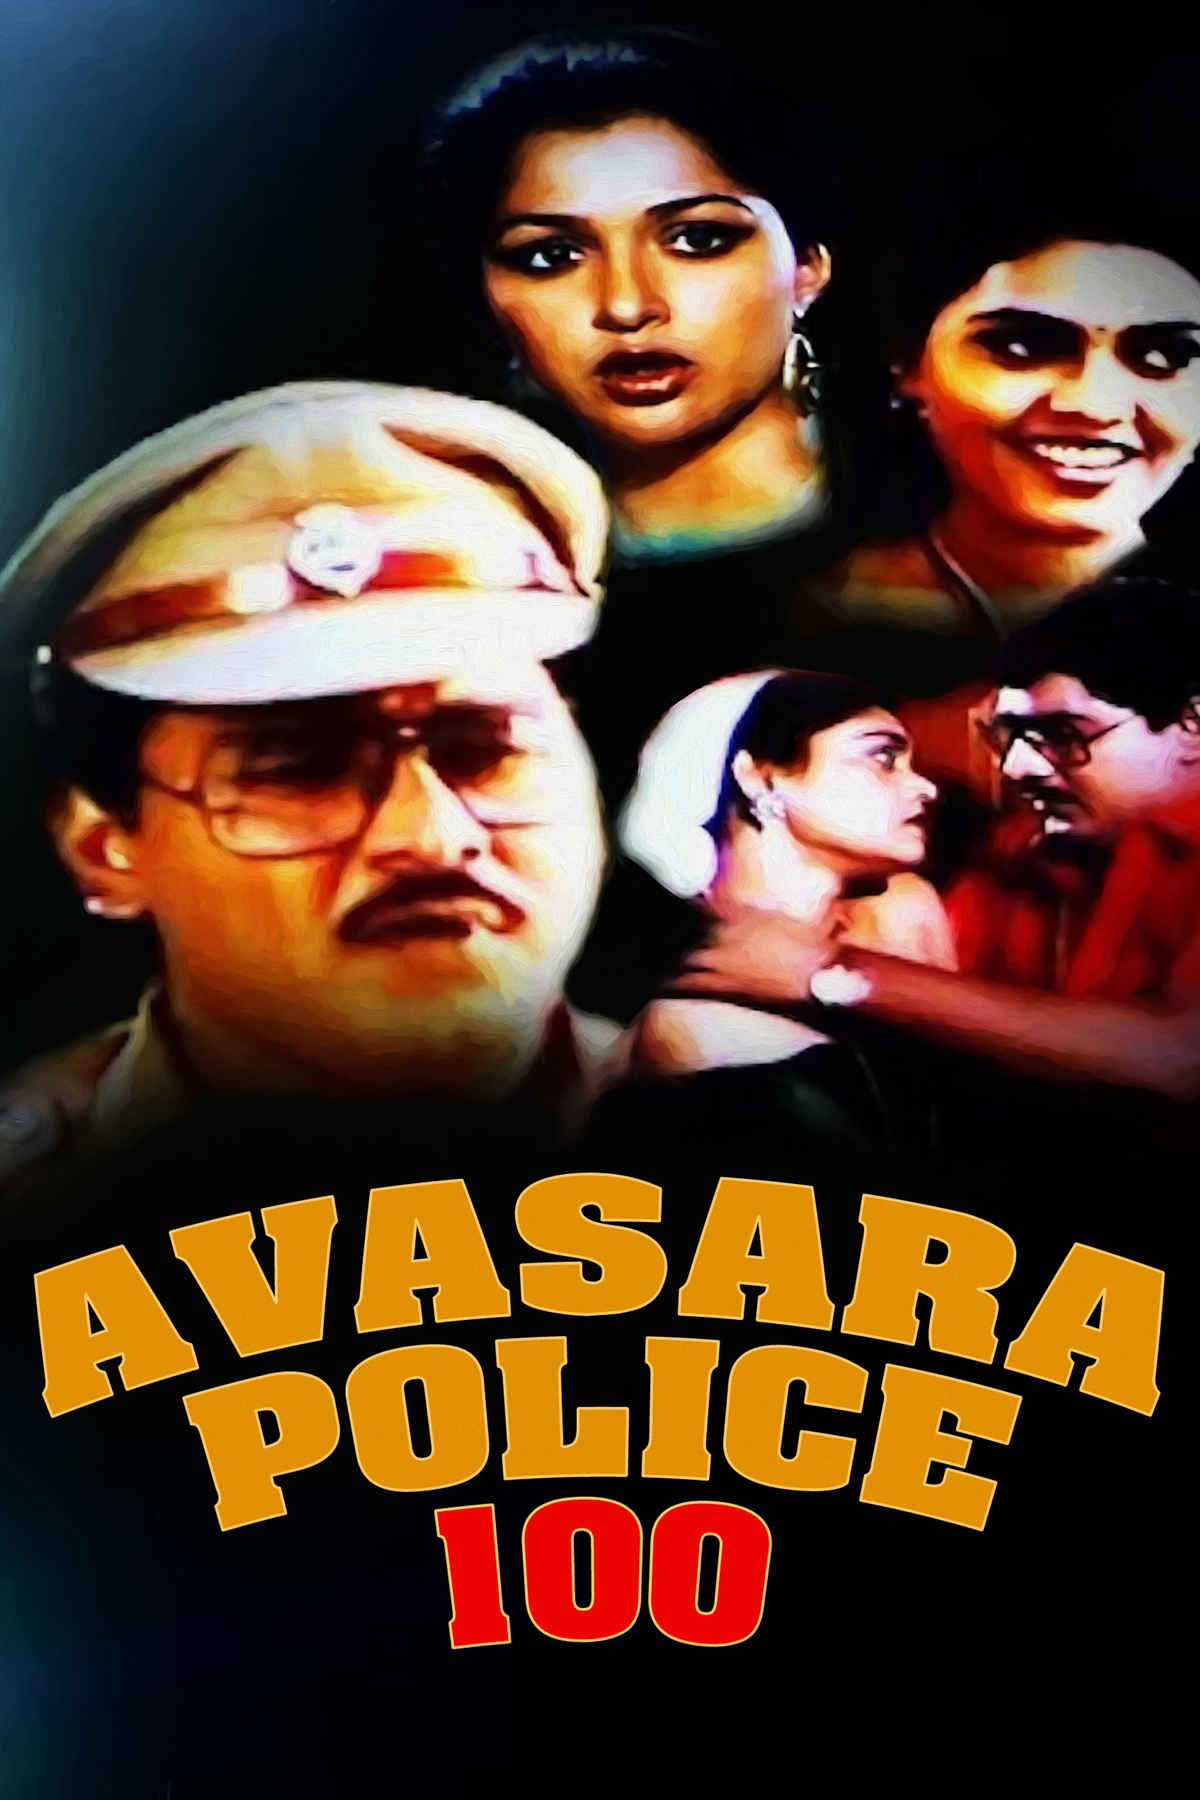 Avasara Police 100